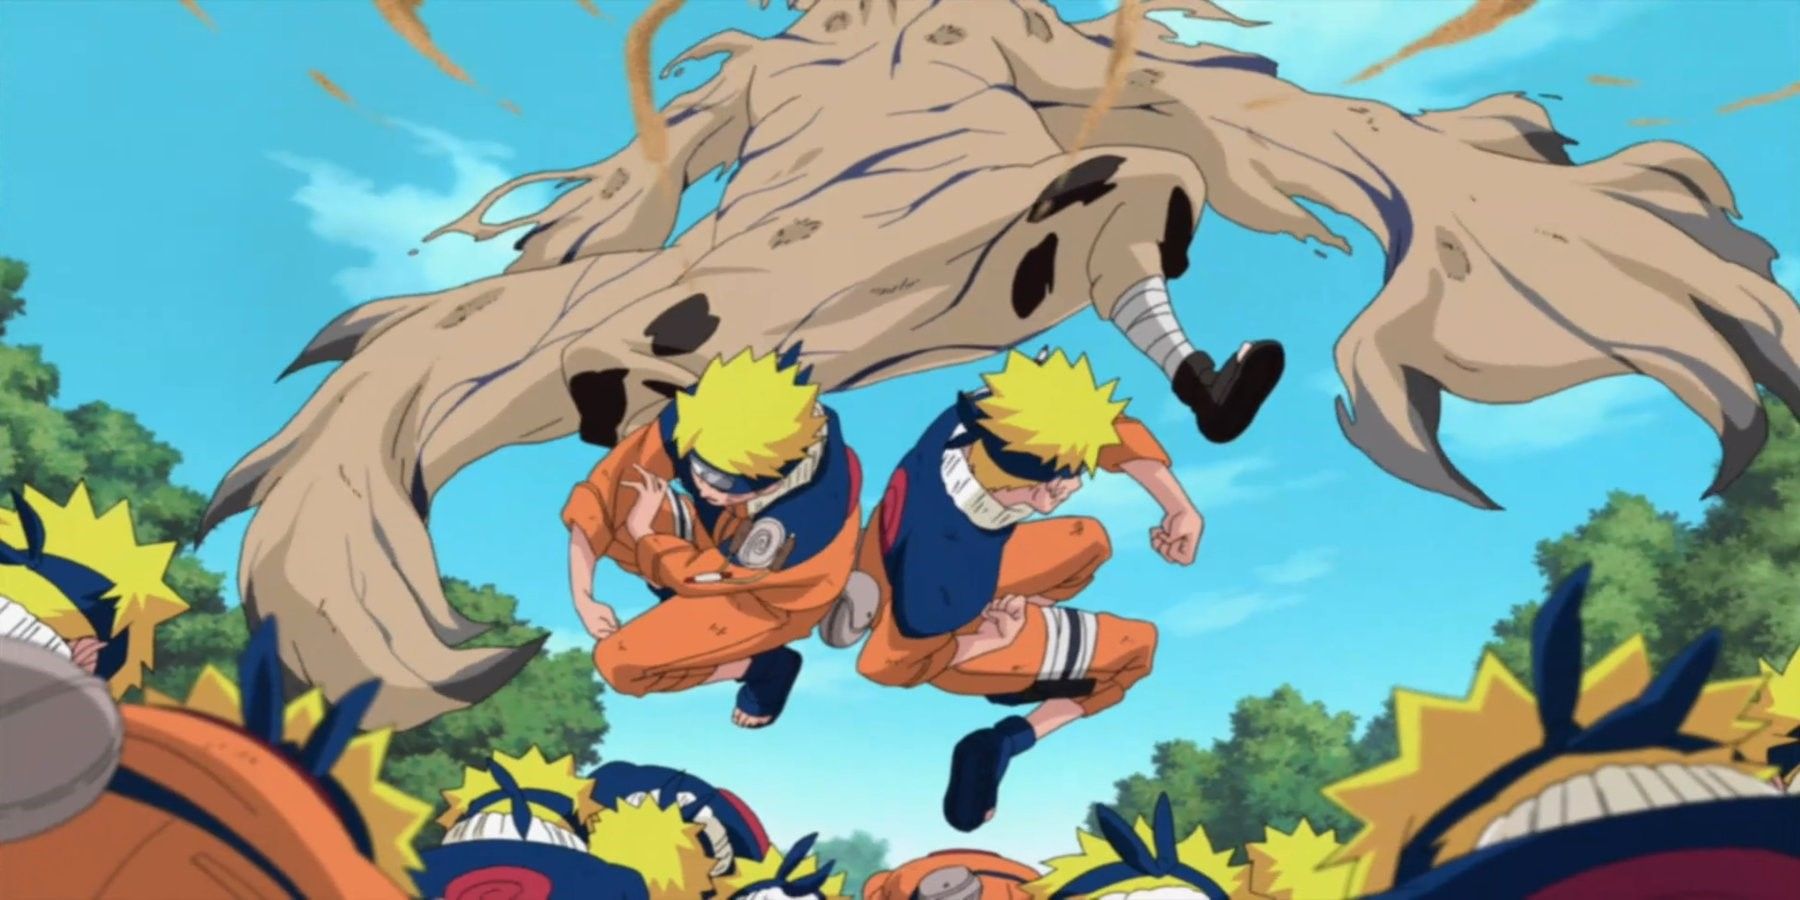 Naruto's clones fighting a transformed Gaara in Naruto.